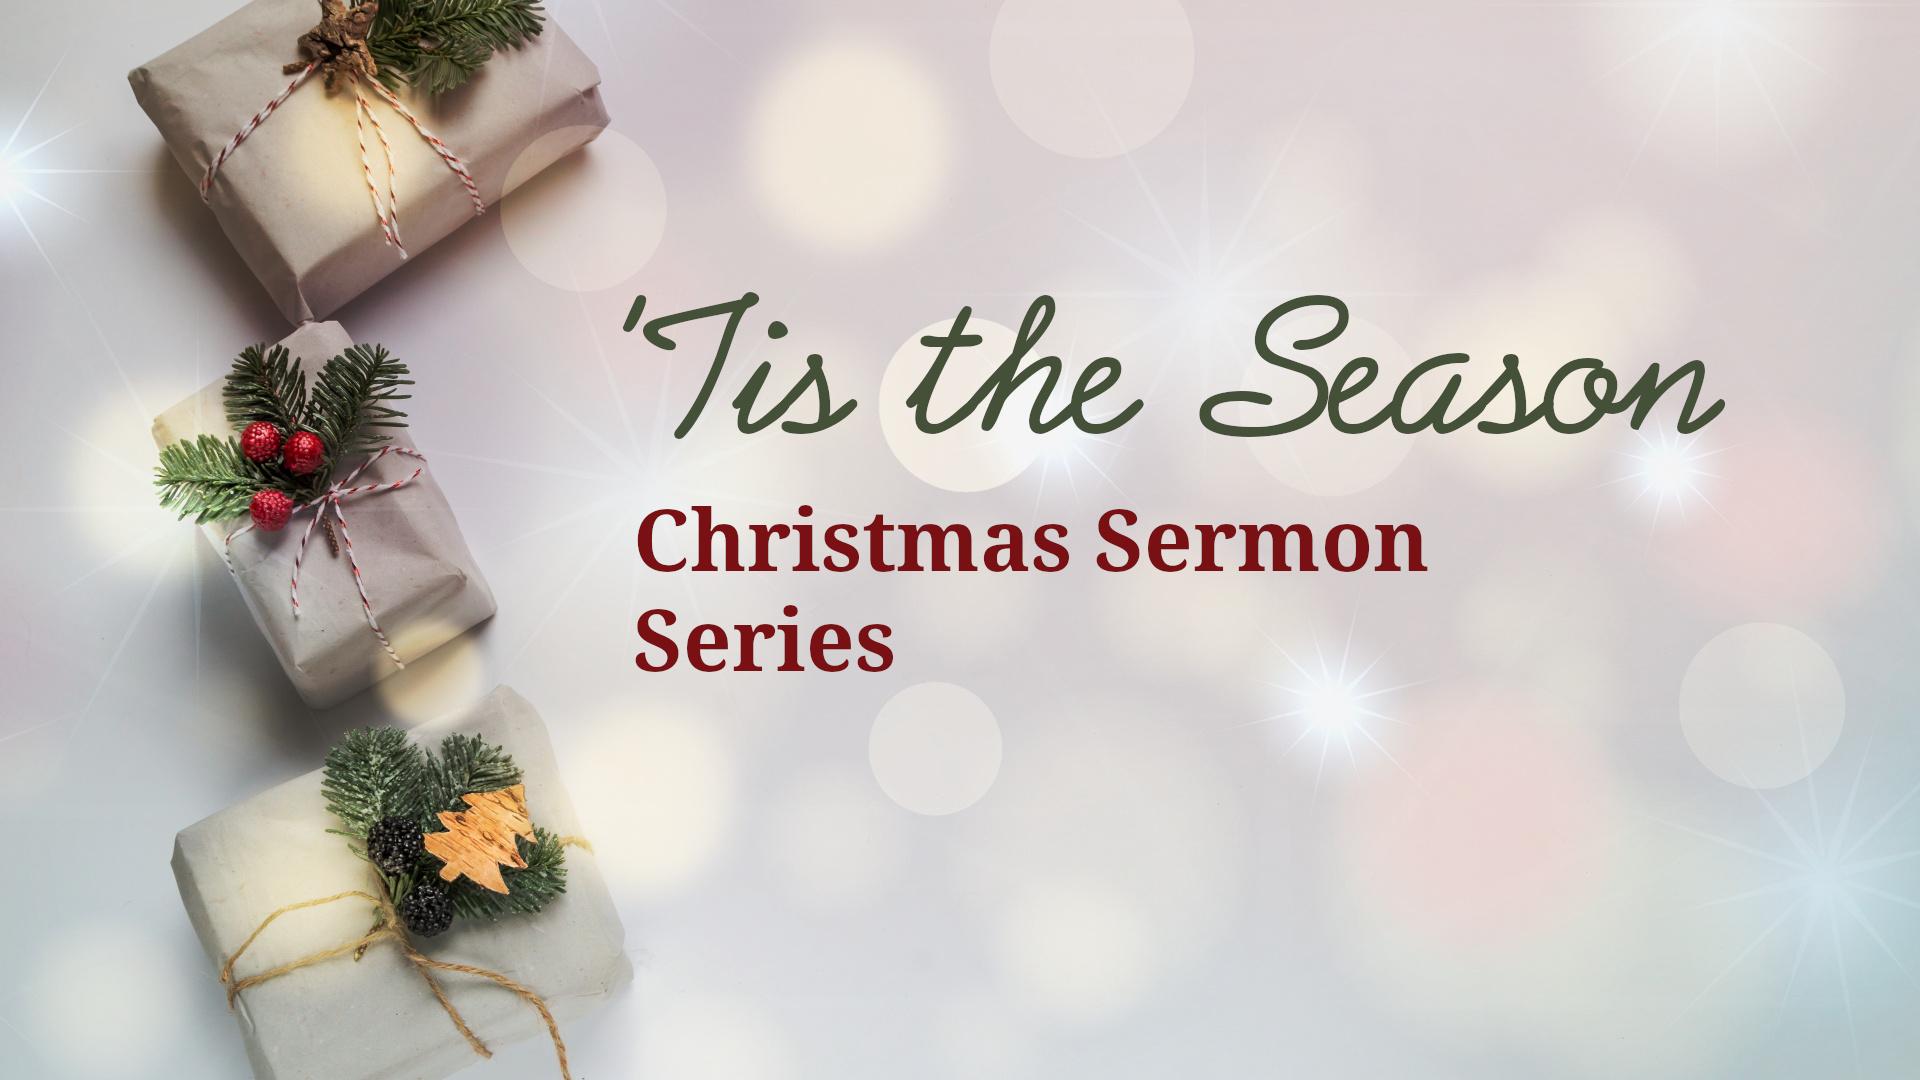 Tis the Season: Christmas Sermon Series by Dr. John L. Rothra